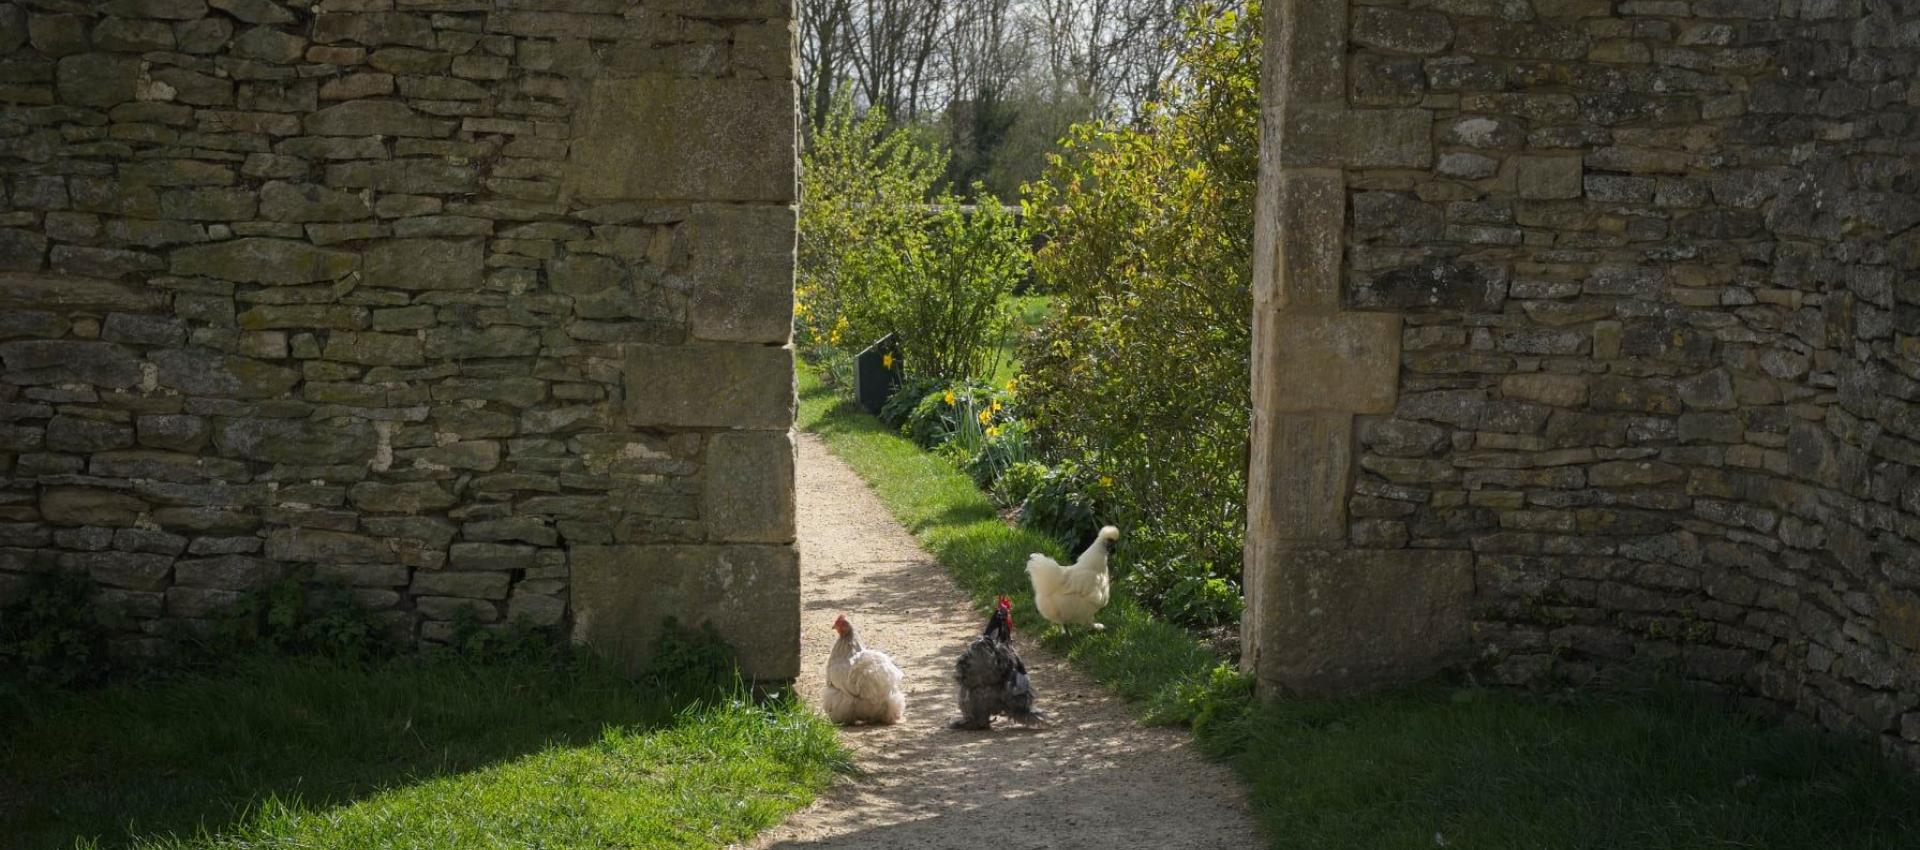 Three hens walking on a path.